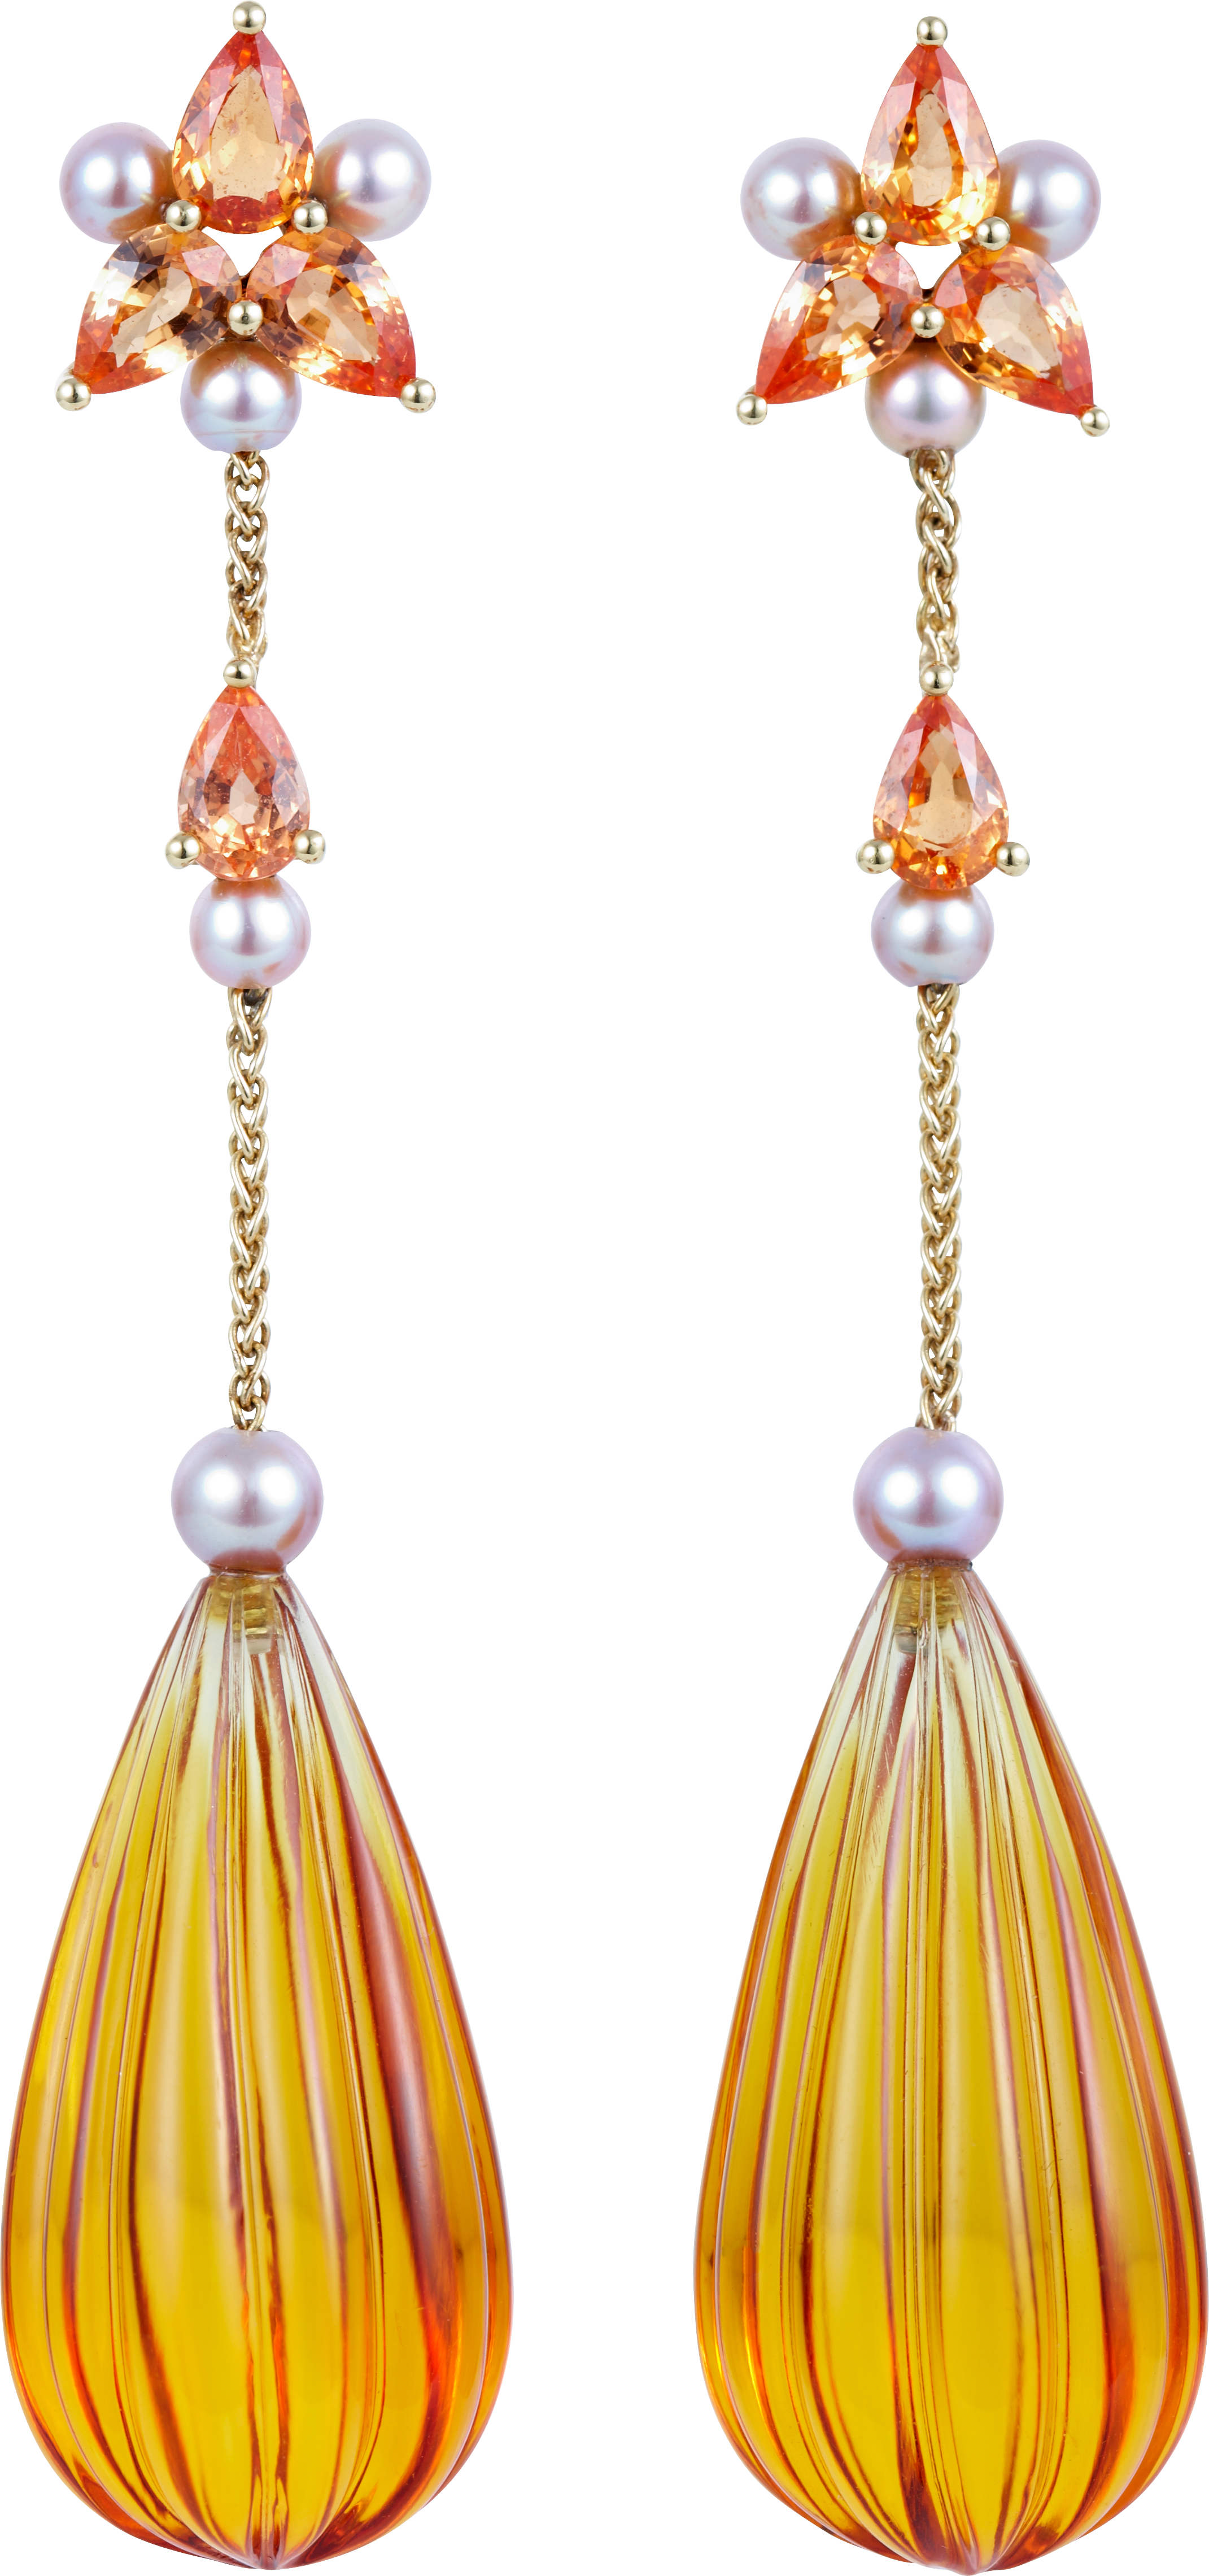 Diamond earrings PNG image